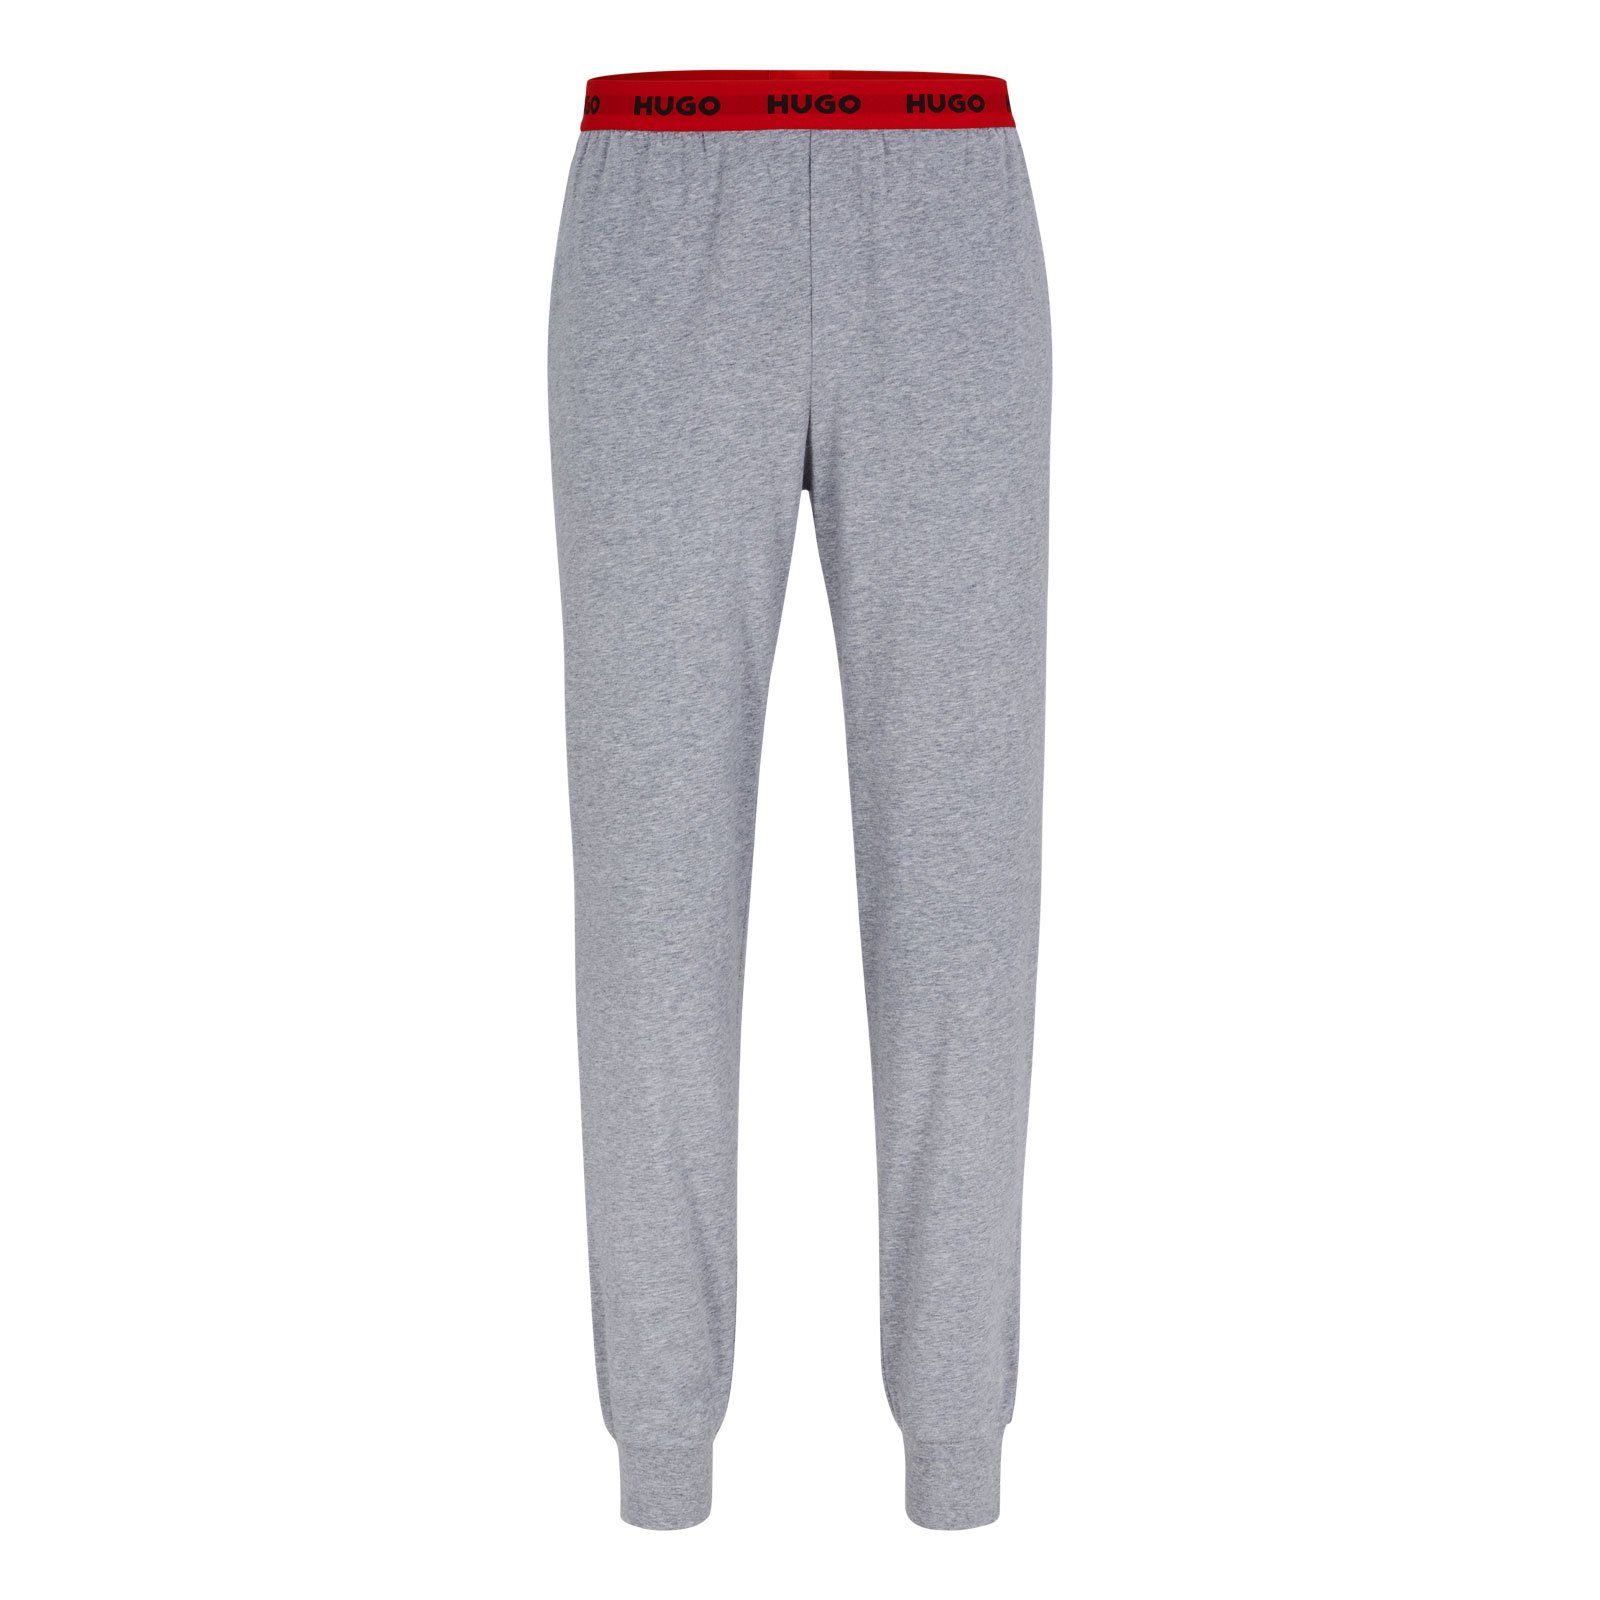 HUGO Pyjamahose Linked Pants mit sichtbarem Elastikbund 035 medium grey